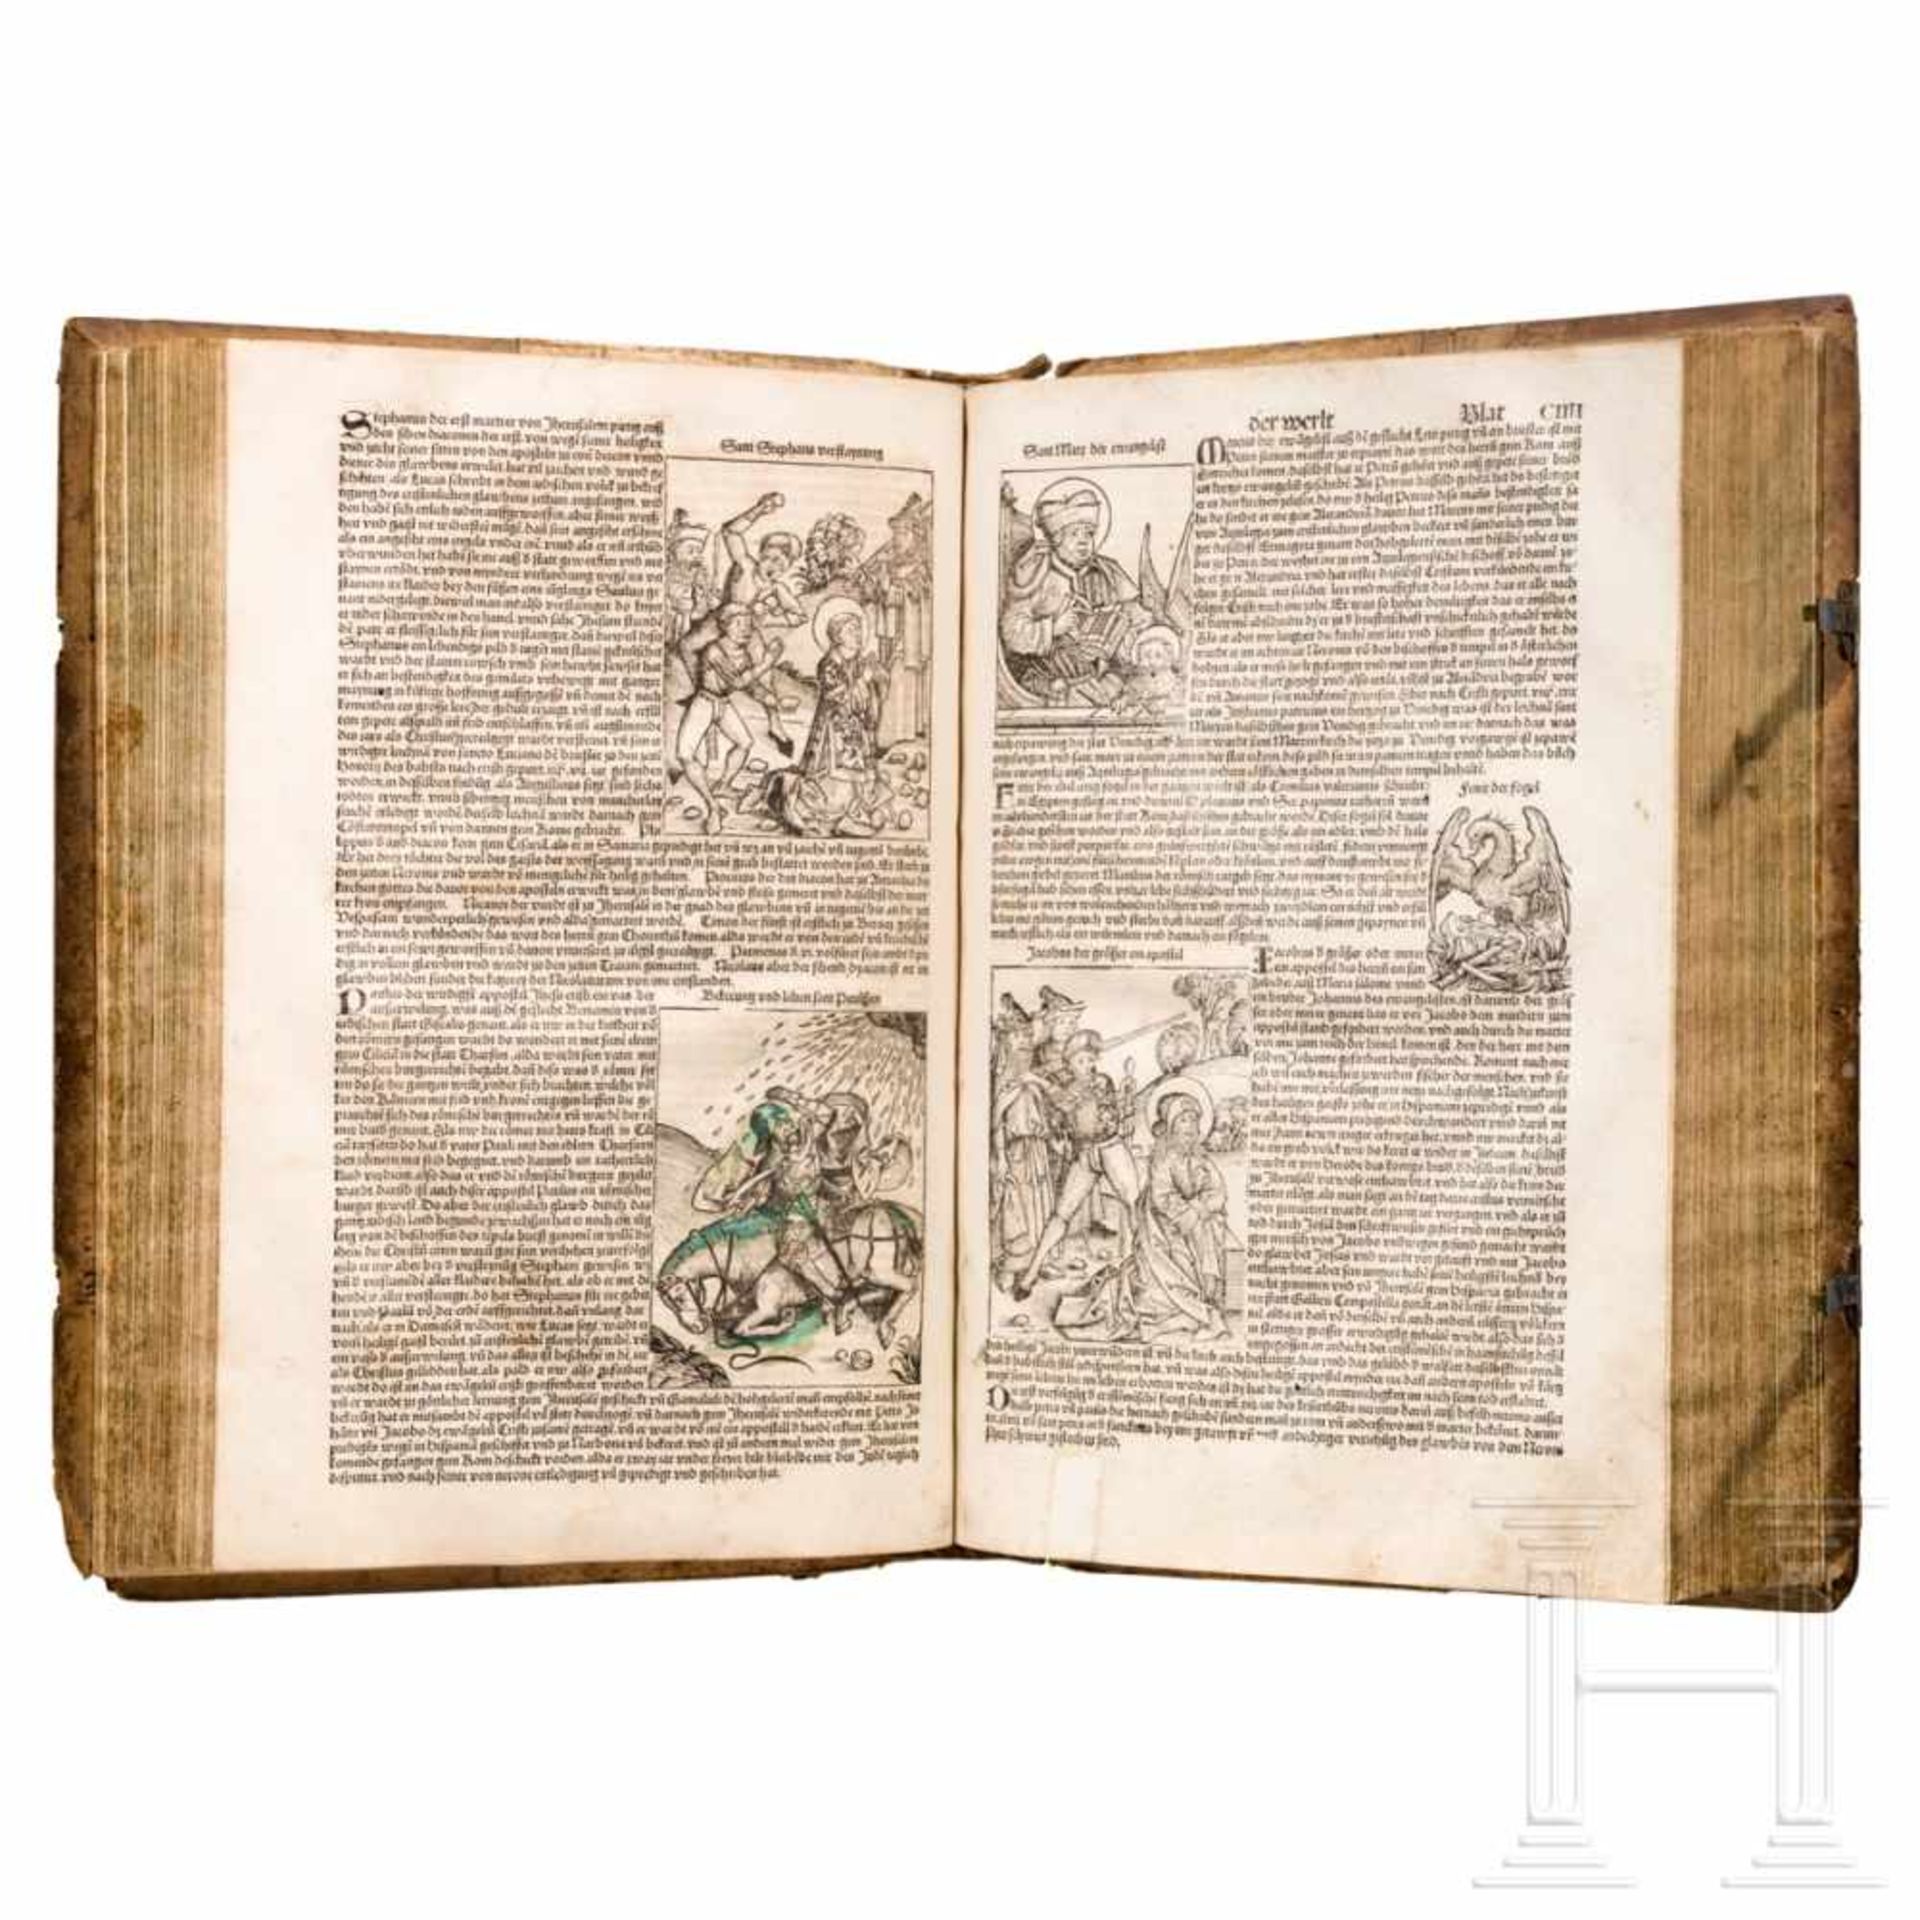 Hartmann Schedel, Das Buch der Chroniken, Nürnberg, A. Koberger, 1493 - Image 27 of 51